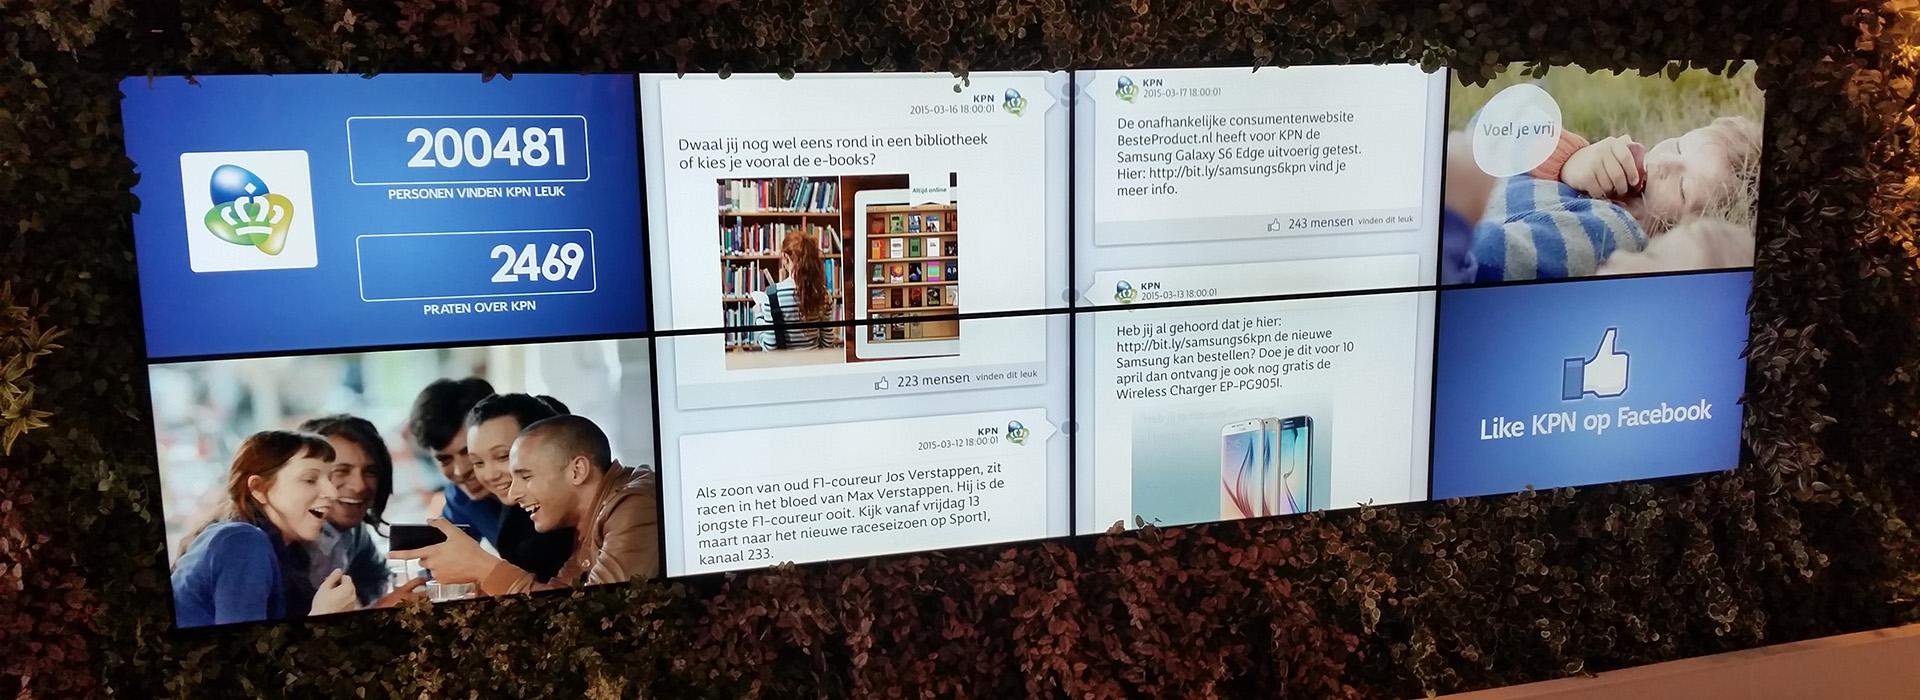 wall-display-screens-KPN